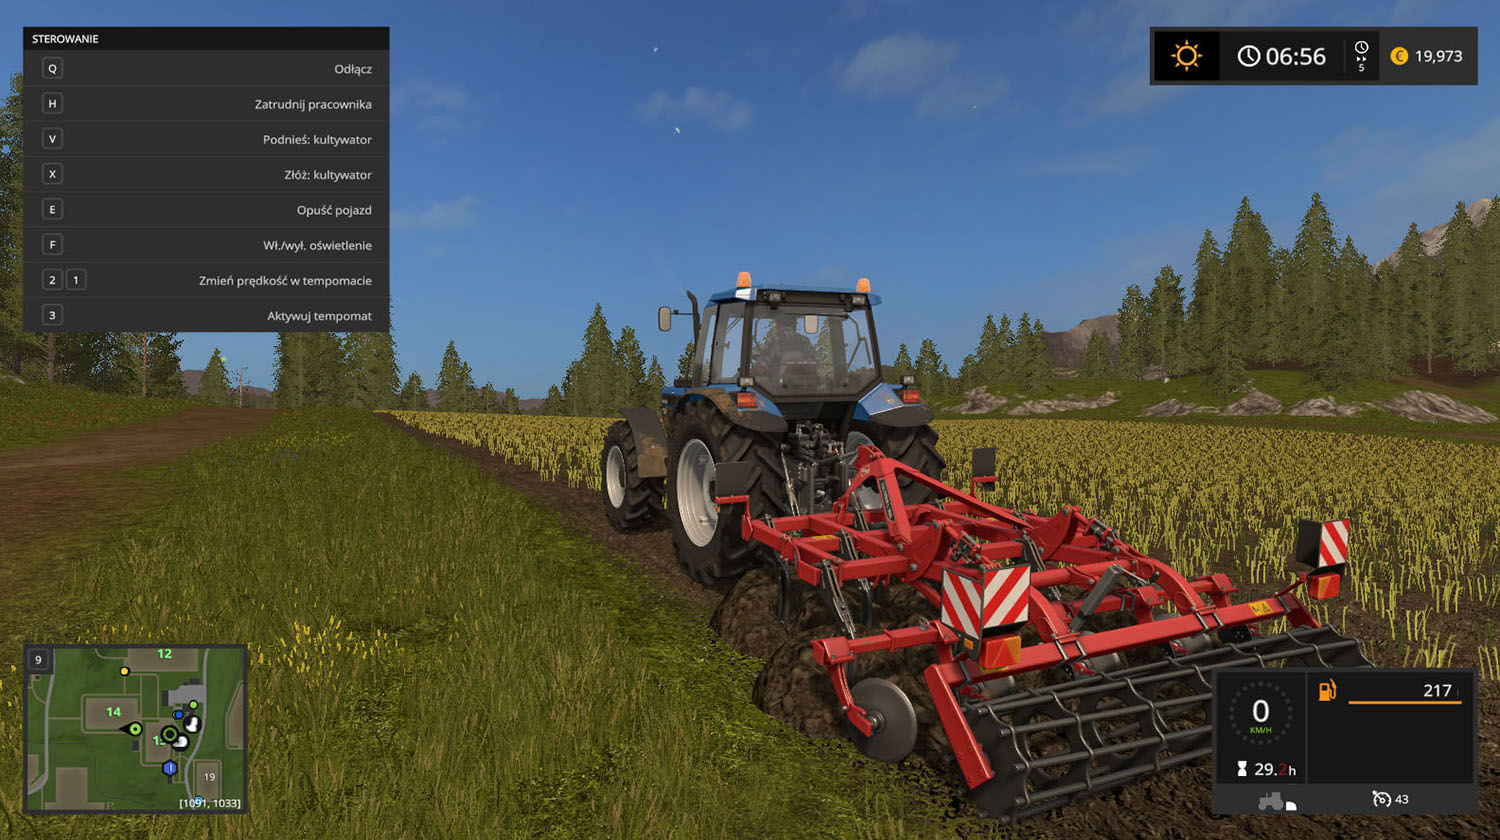 farming simulator 17 download cost